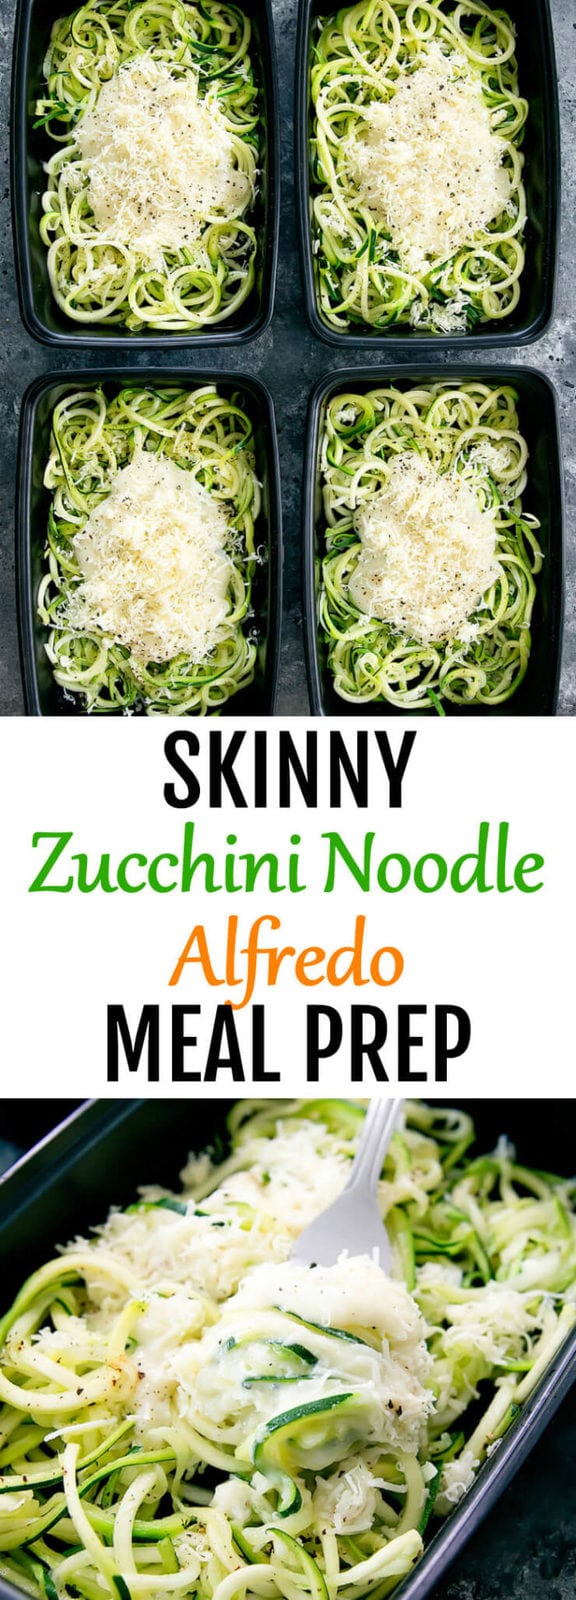 Skinny Zucchini Noodle Alfredo Weekly Meal Prep